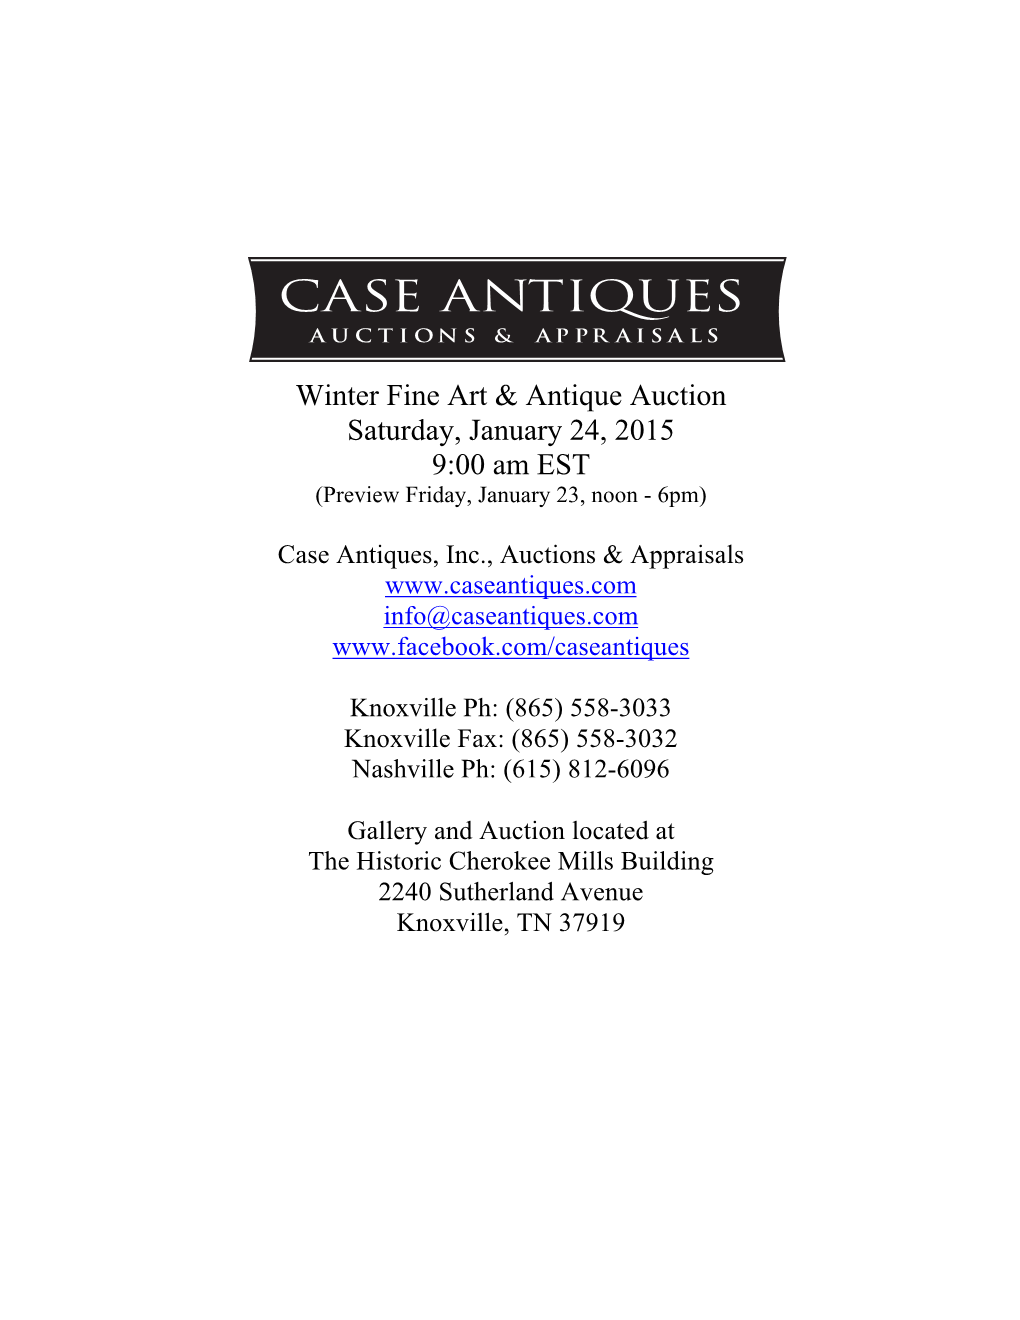 Winter Fine Art & Antique Auction Saturday, January 24, 2015 9:00